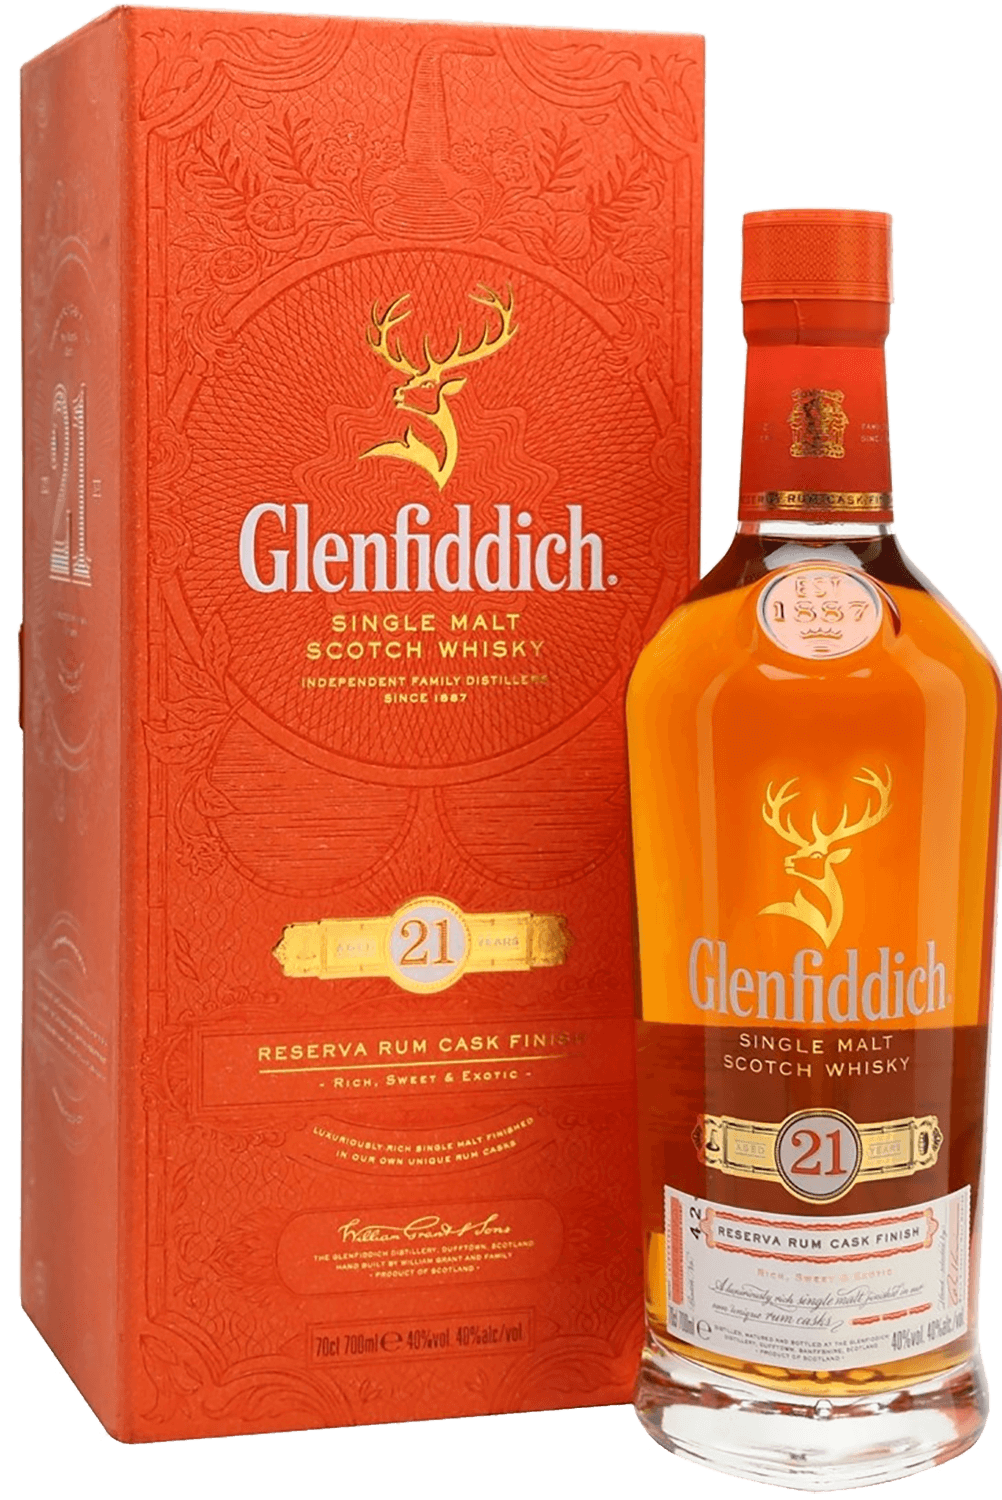 Glenfiddich Single Malt Scotch Whisky 21 yo (gift box)